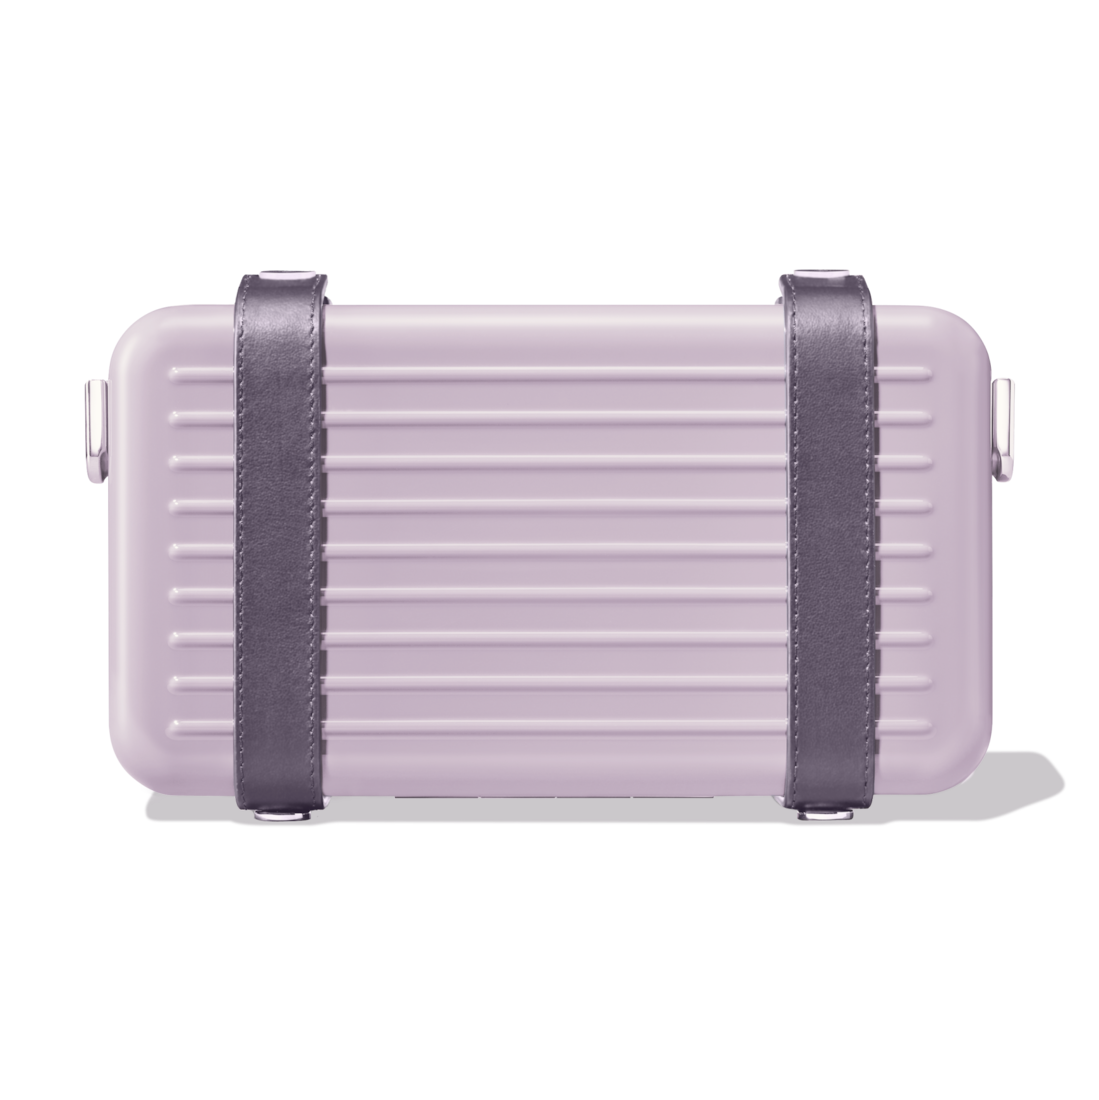 Personal Polycarbonate Cross-Body Bag | Lavande purple | RIMOWA